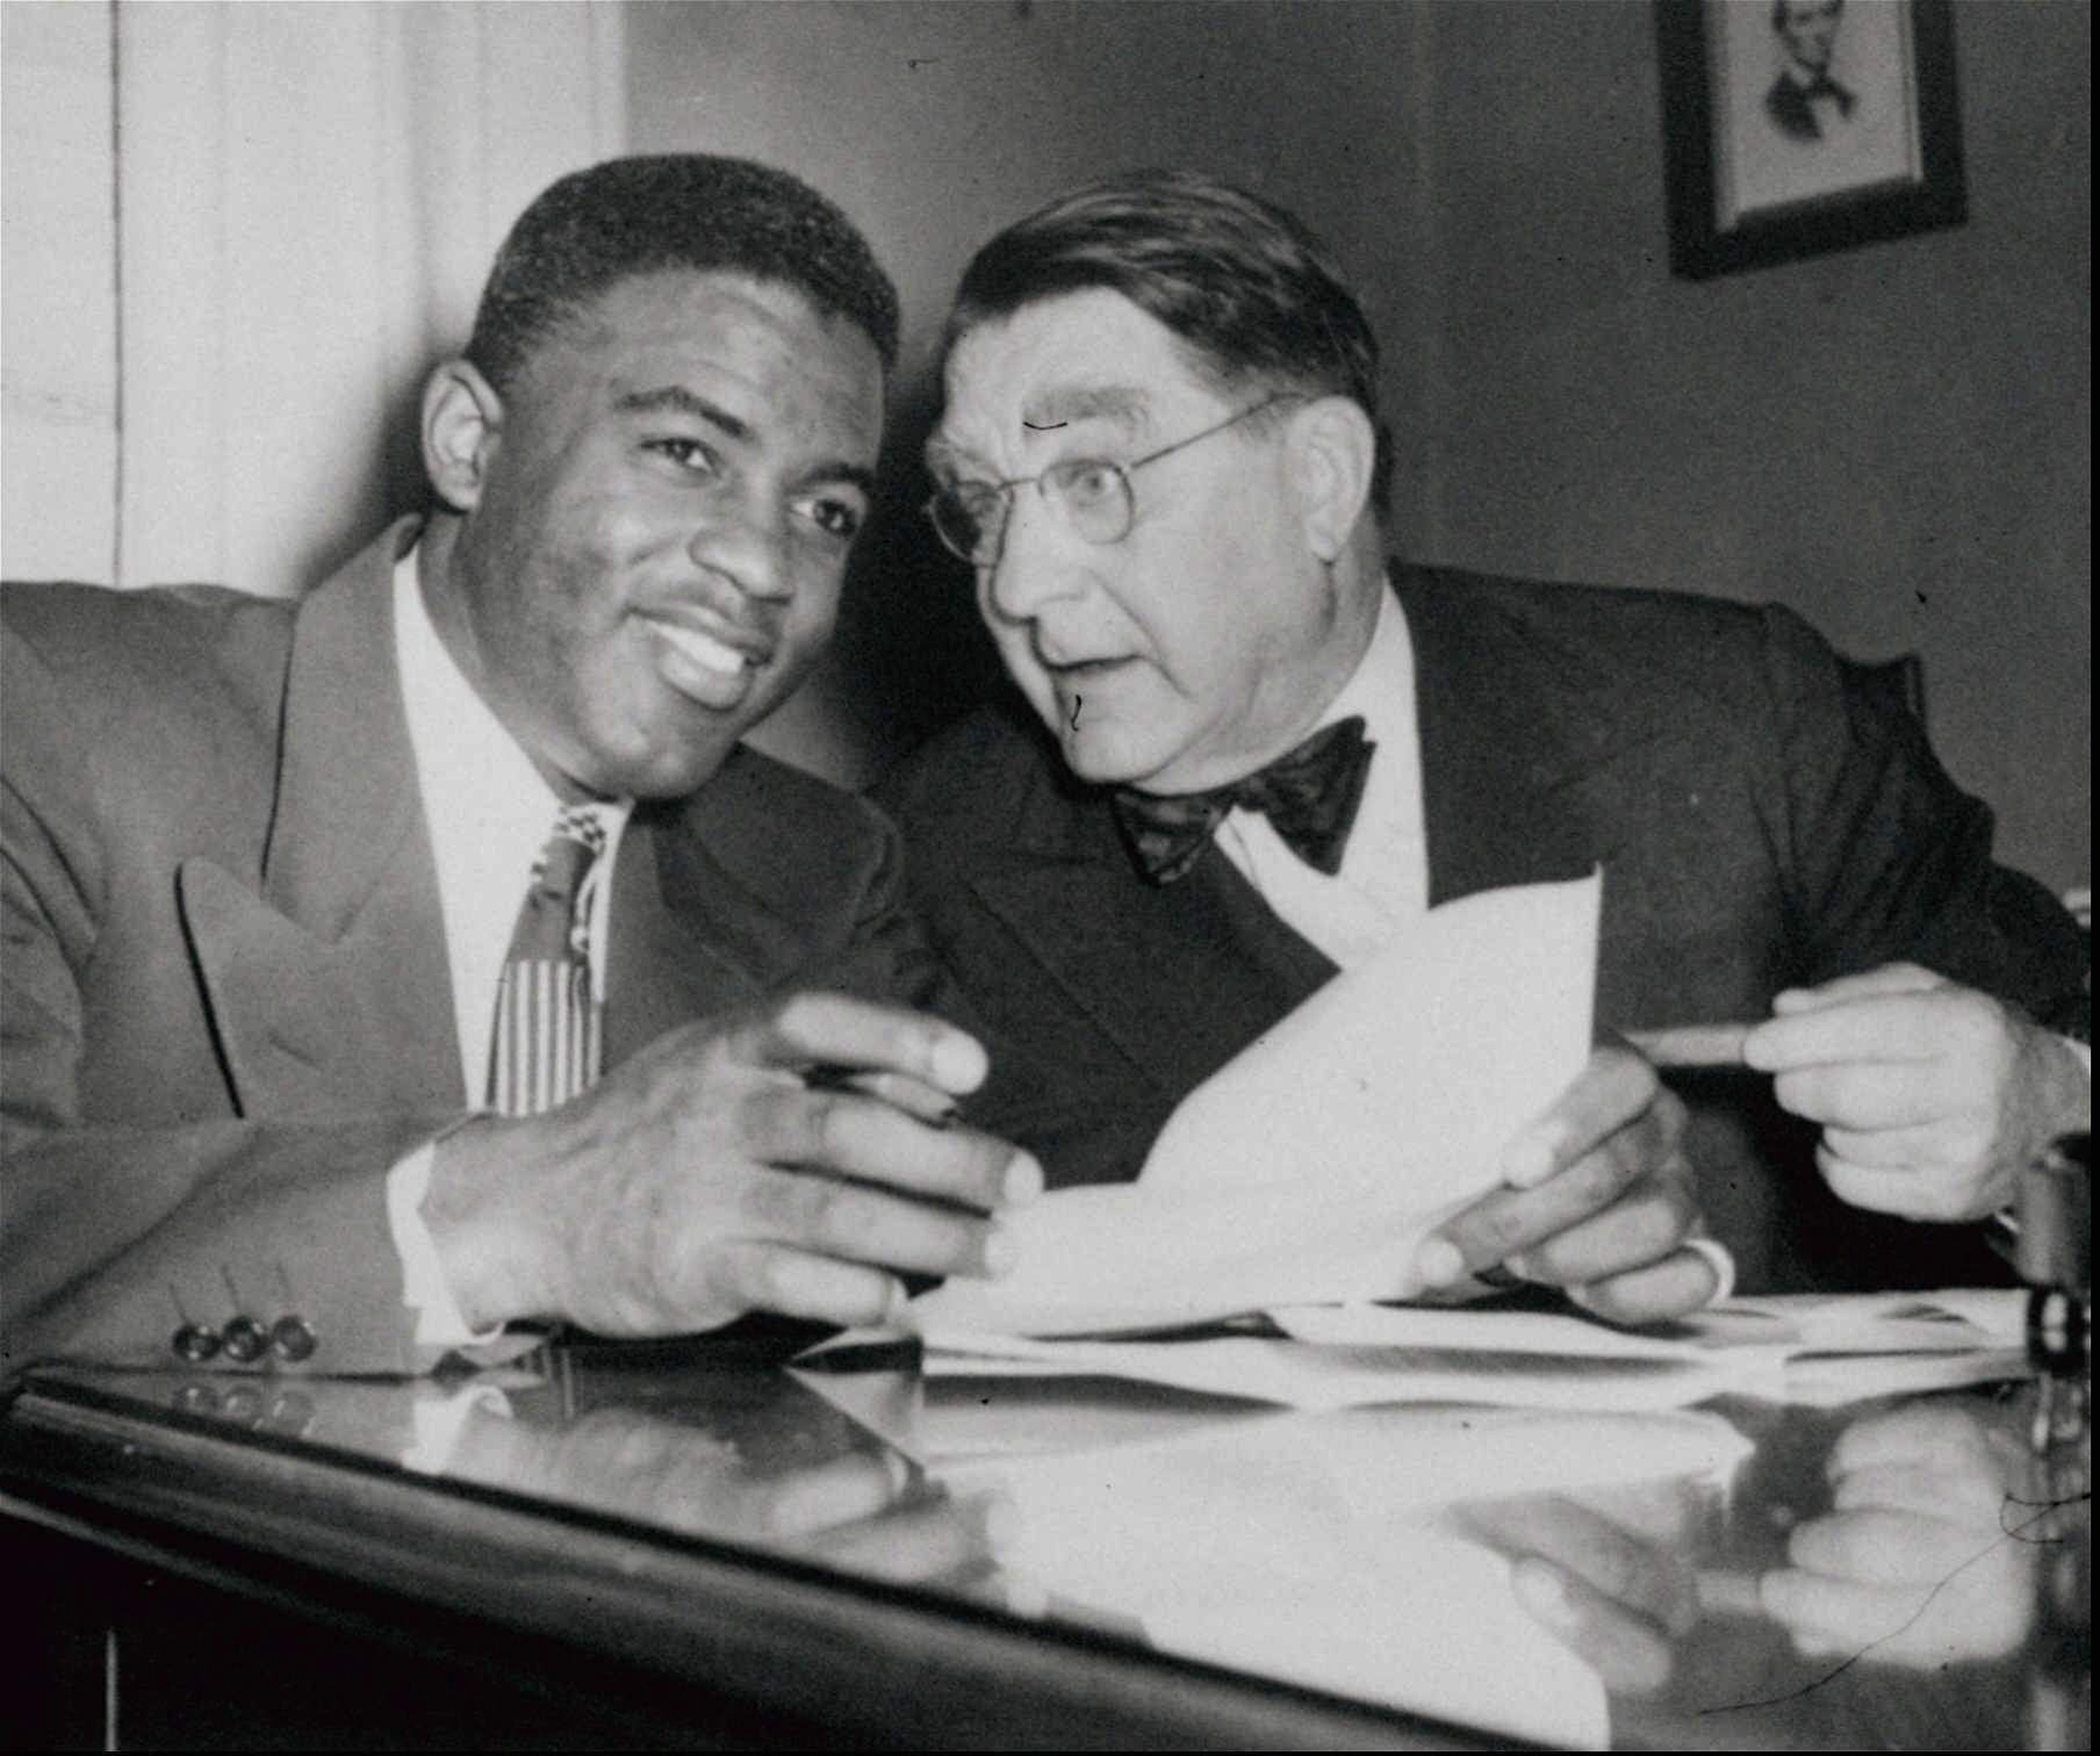 Negro Leagues Baseball Museum commemorates centennial – SportsLogos.Net News